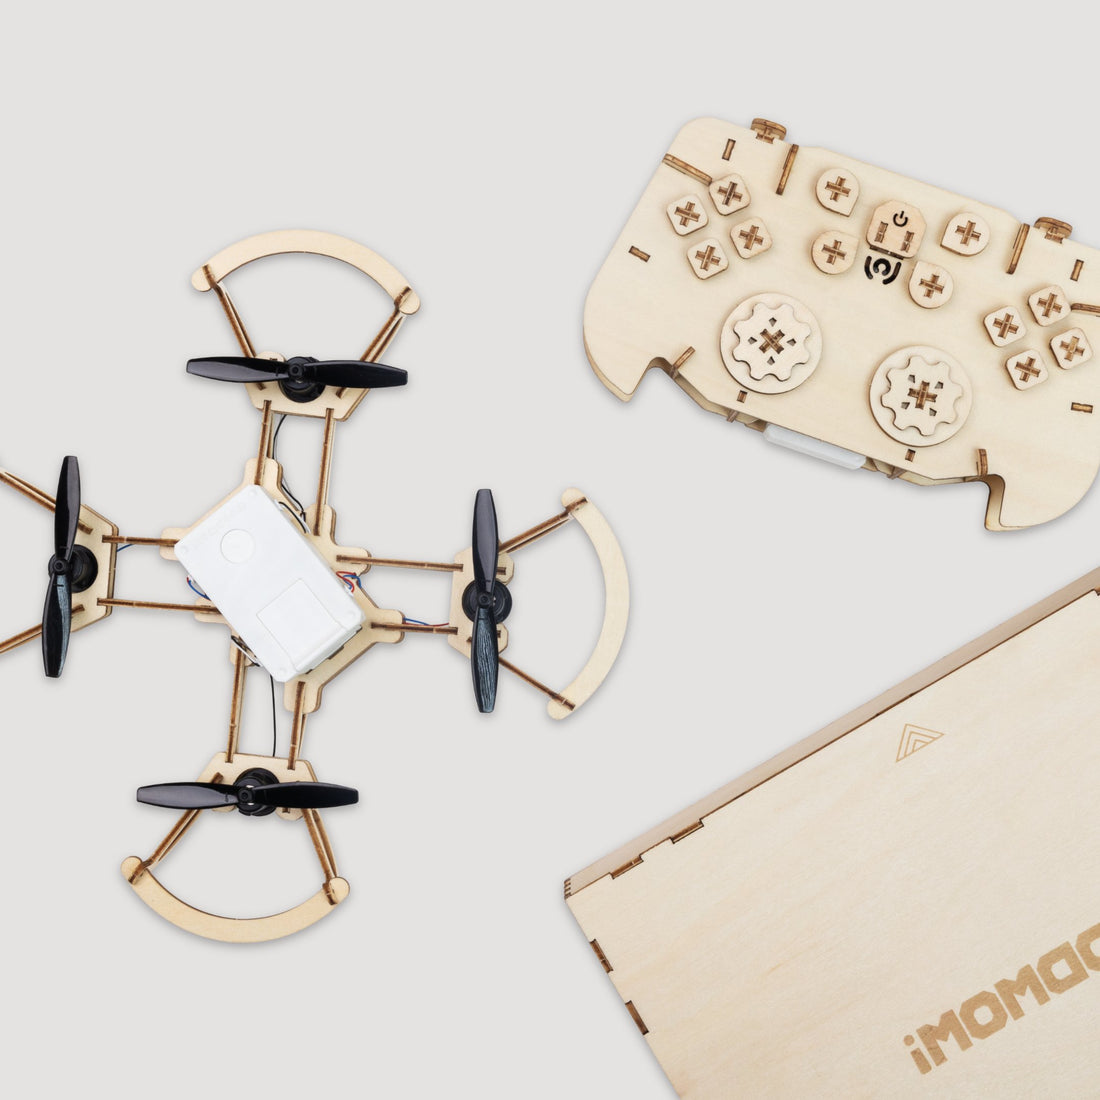 Airwood Sky 3D Wooden Puzzles RC Drone EDU Kit - CROSS